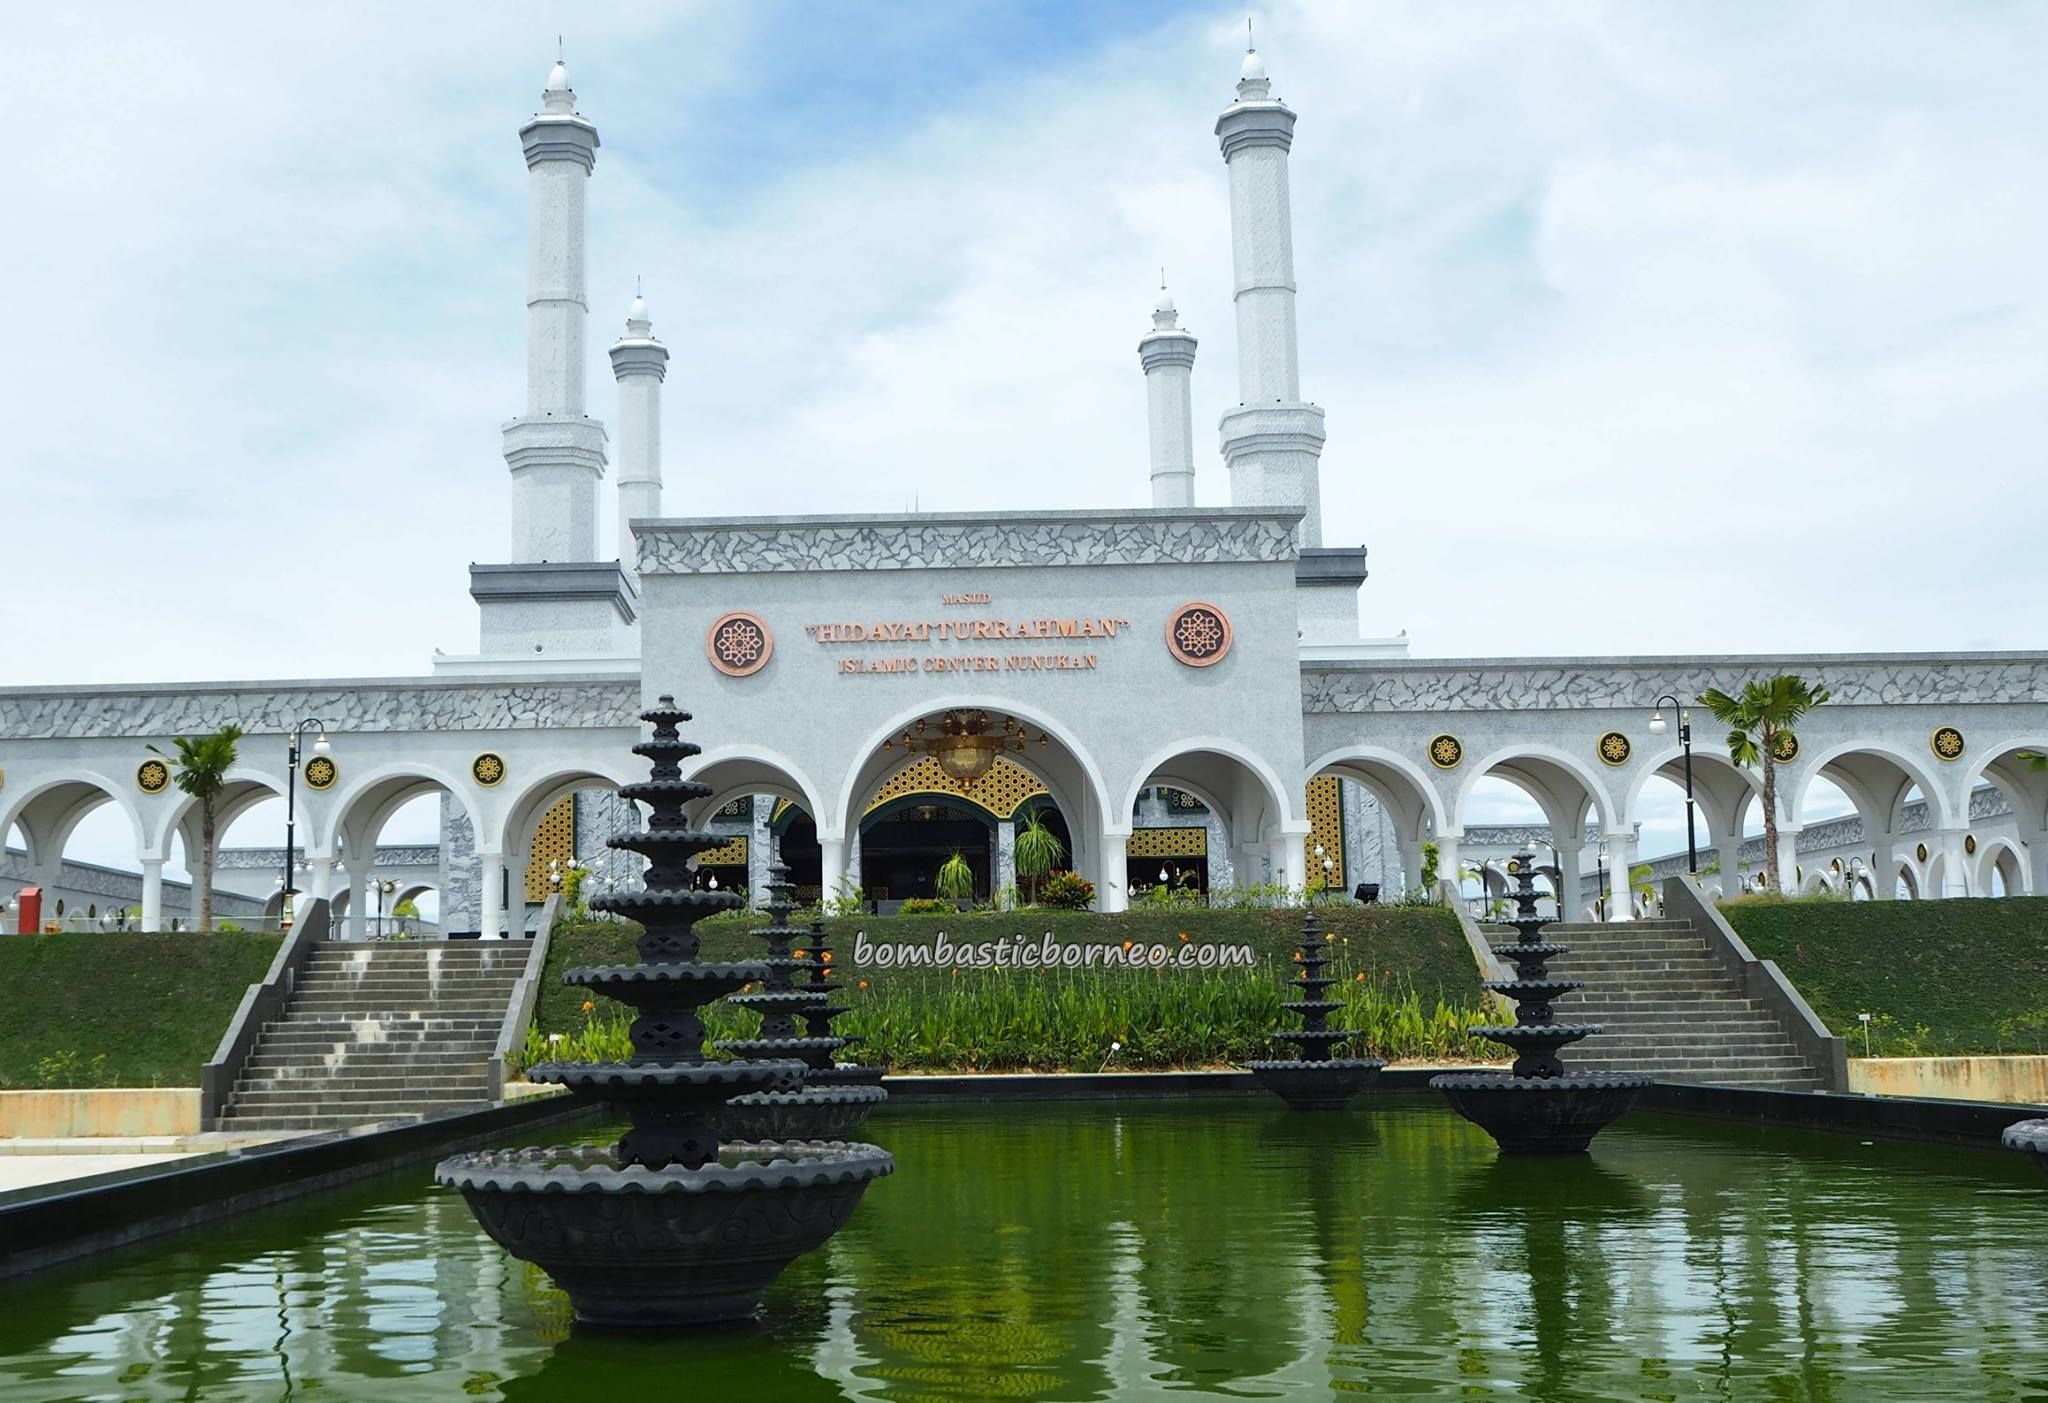 Masjid Islamic Center Nunukan : sumber bombasticborneo.com